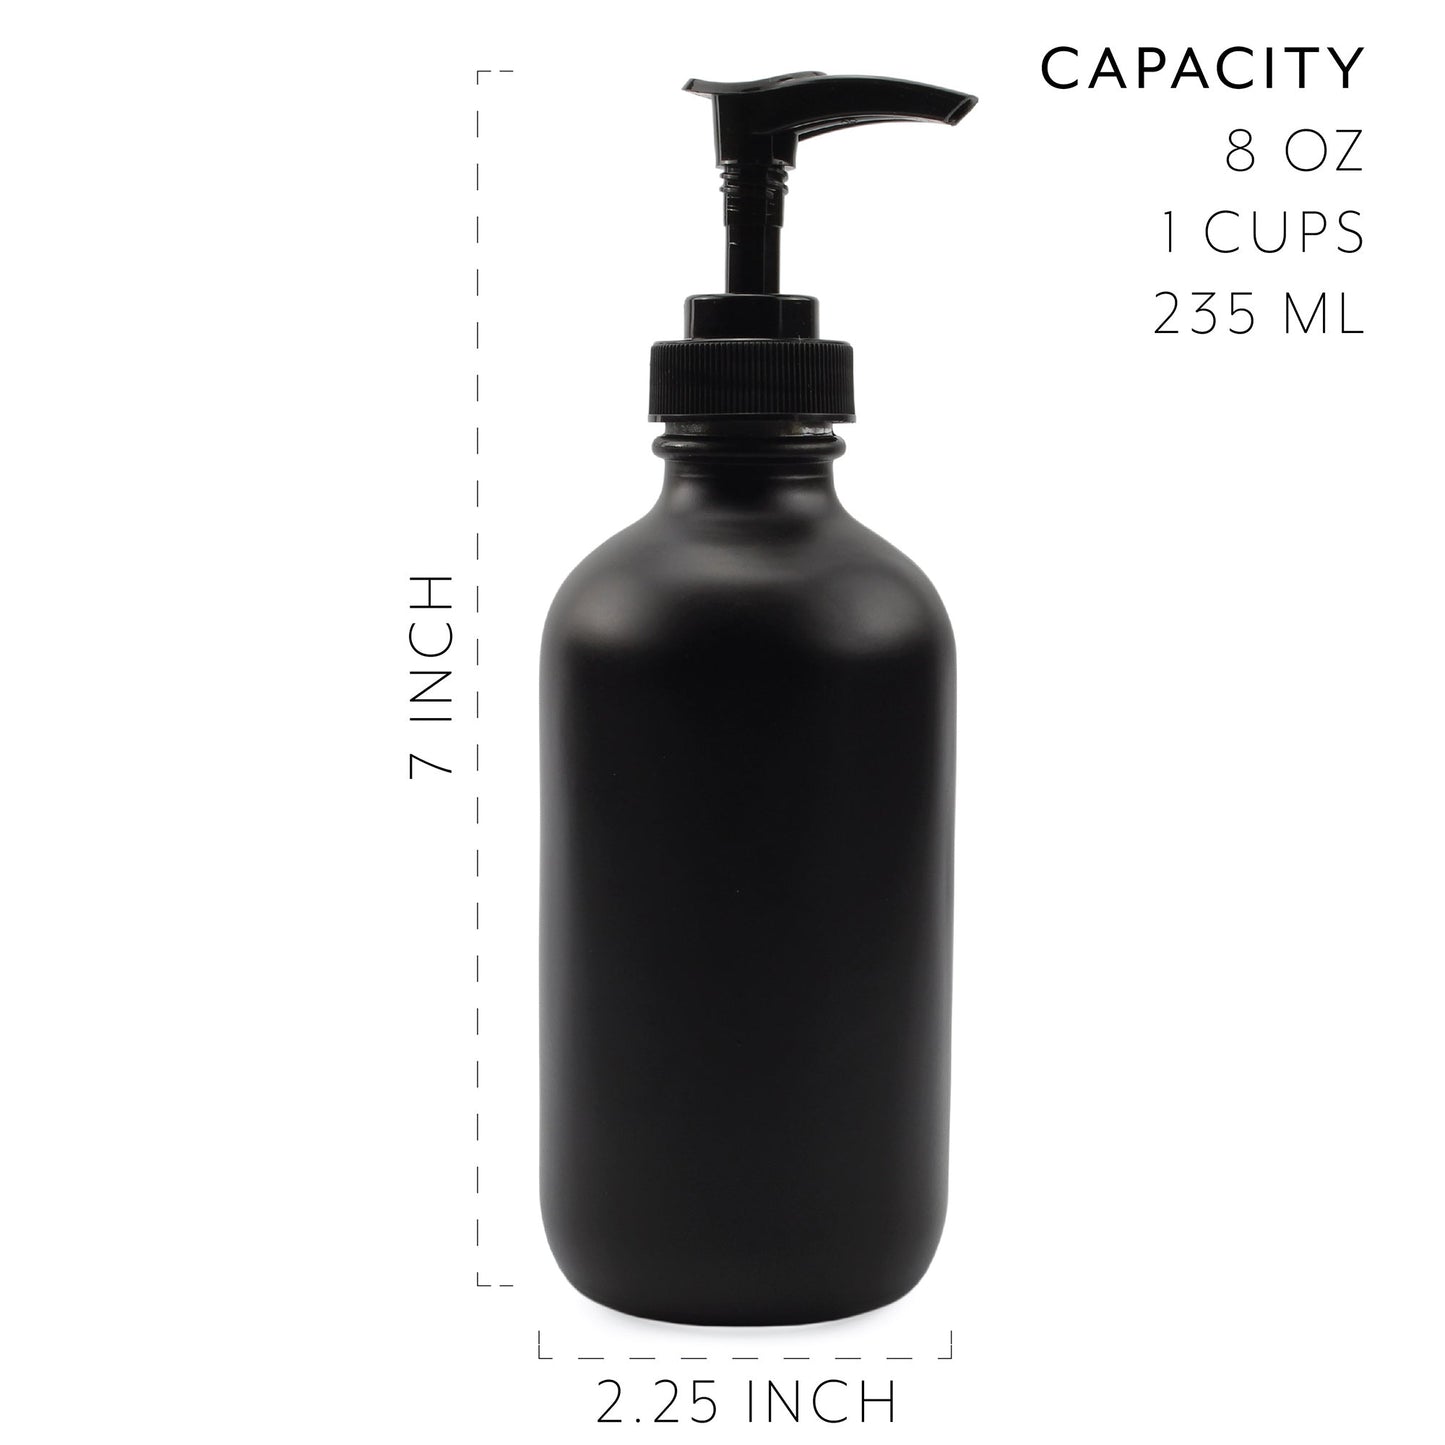 Black Coated 8oz Glass Pump Bottles (4-Pack) - sh1006cb0816